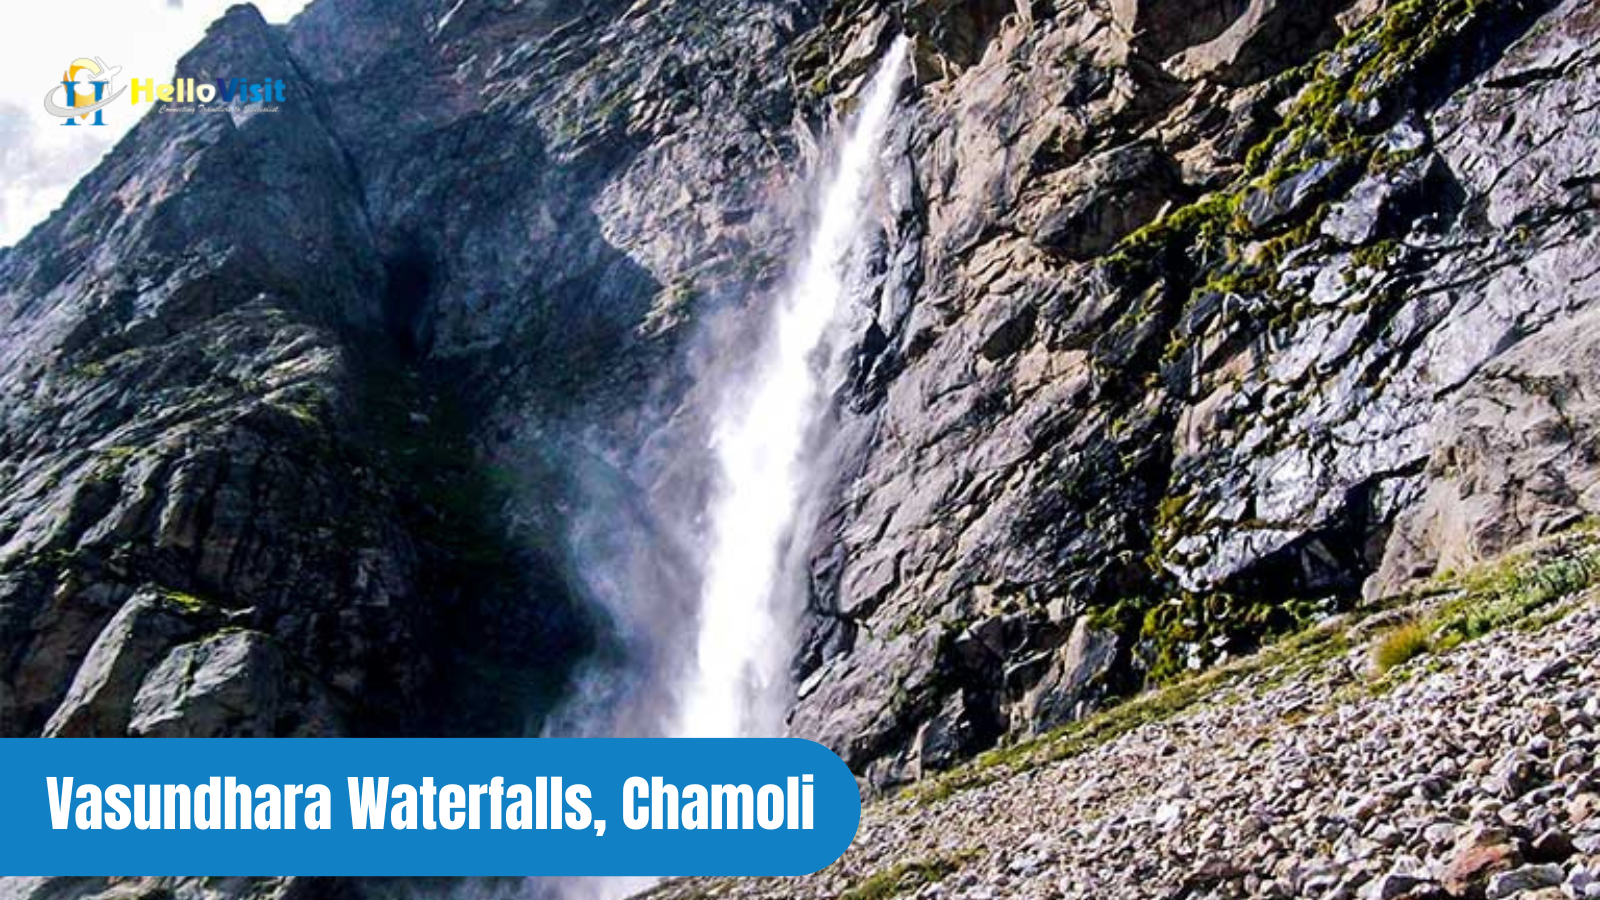 Vasundhara Waterfalls, Chamoli